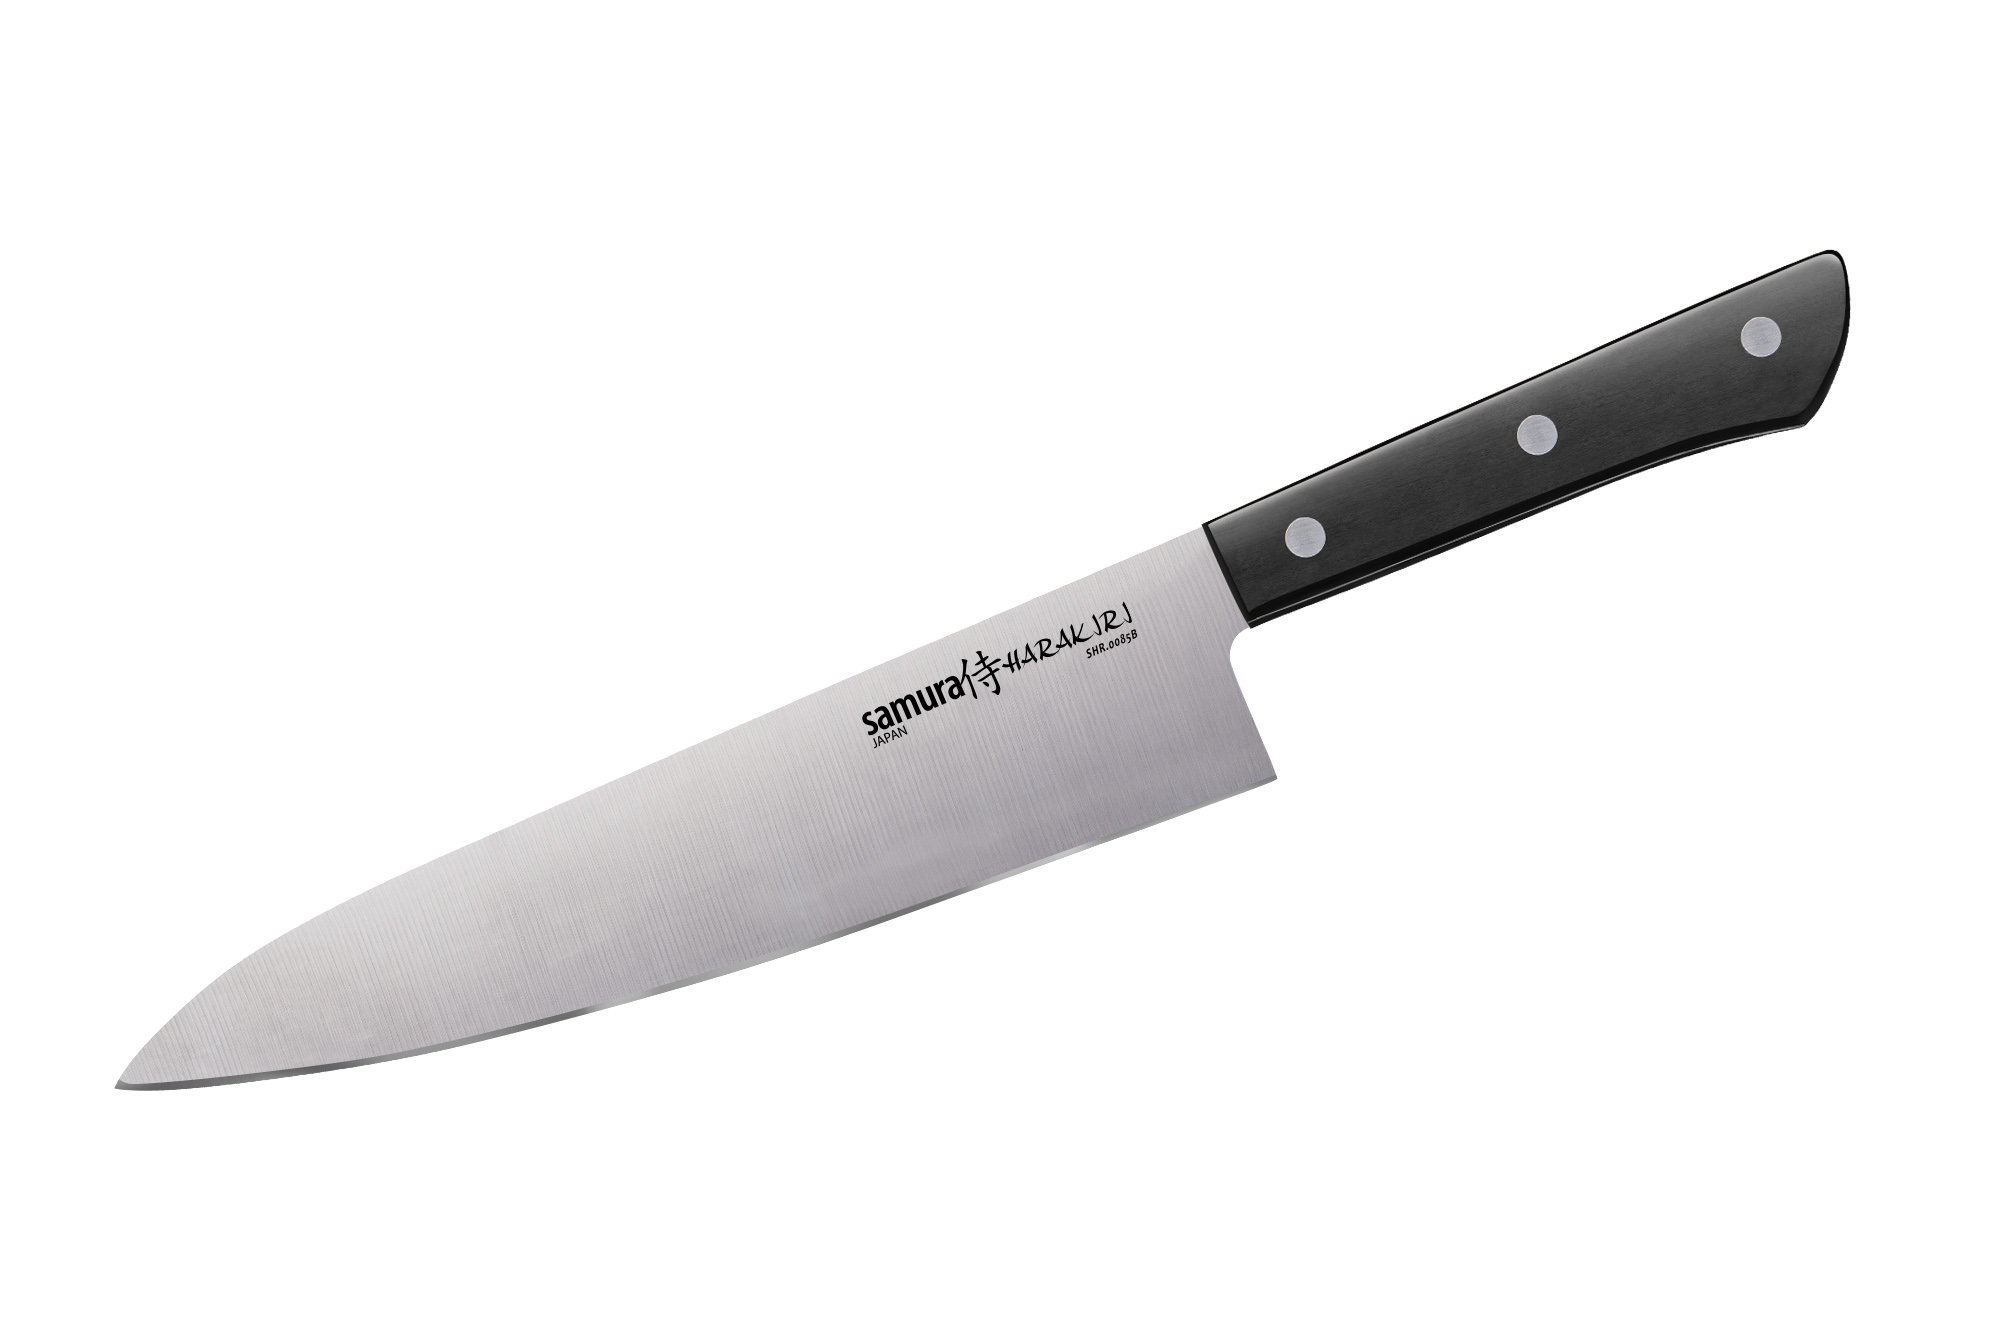 нож кухонный овощной сантоку samura harakiri shr 0095b 175 мм сталь aus 8 рукоять abs пластик чёрный Нож кухонный Шеф Samura 